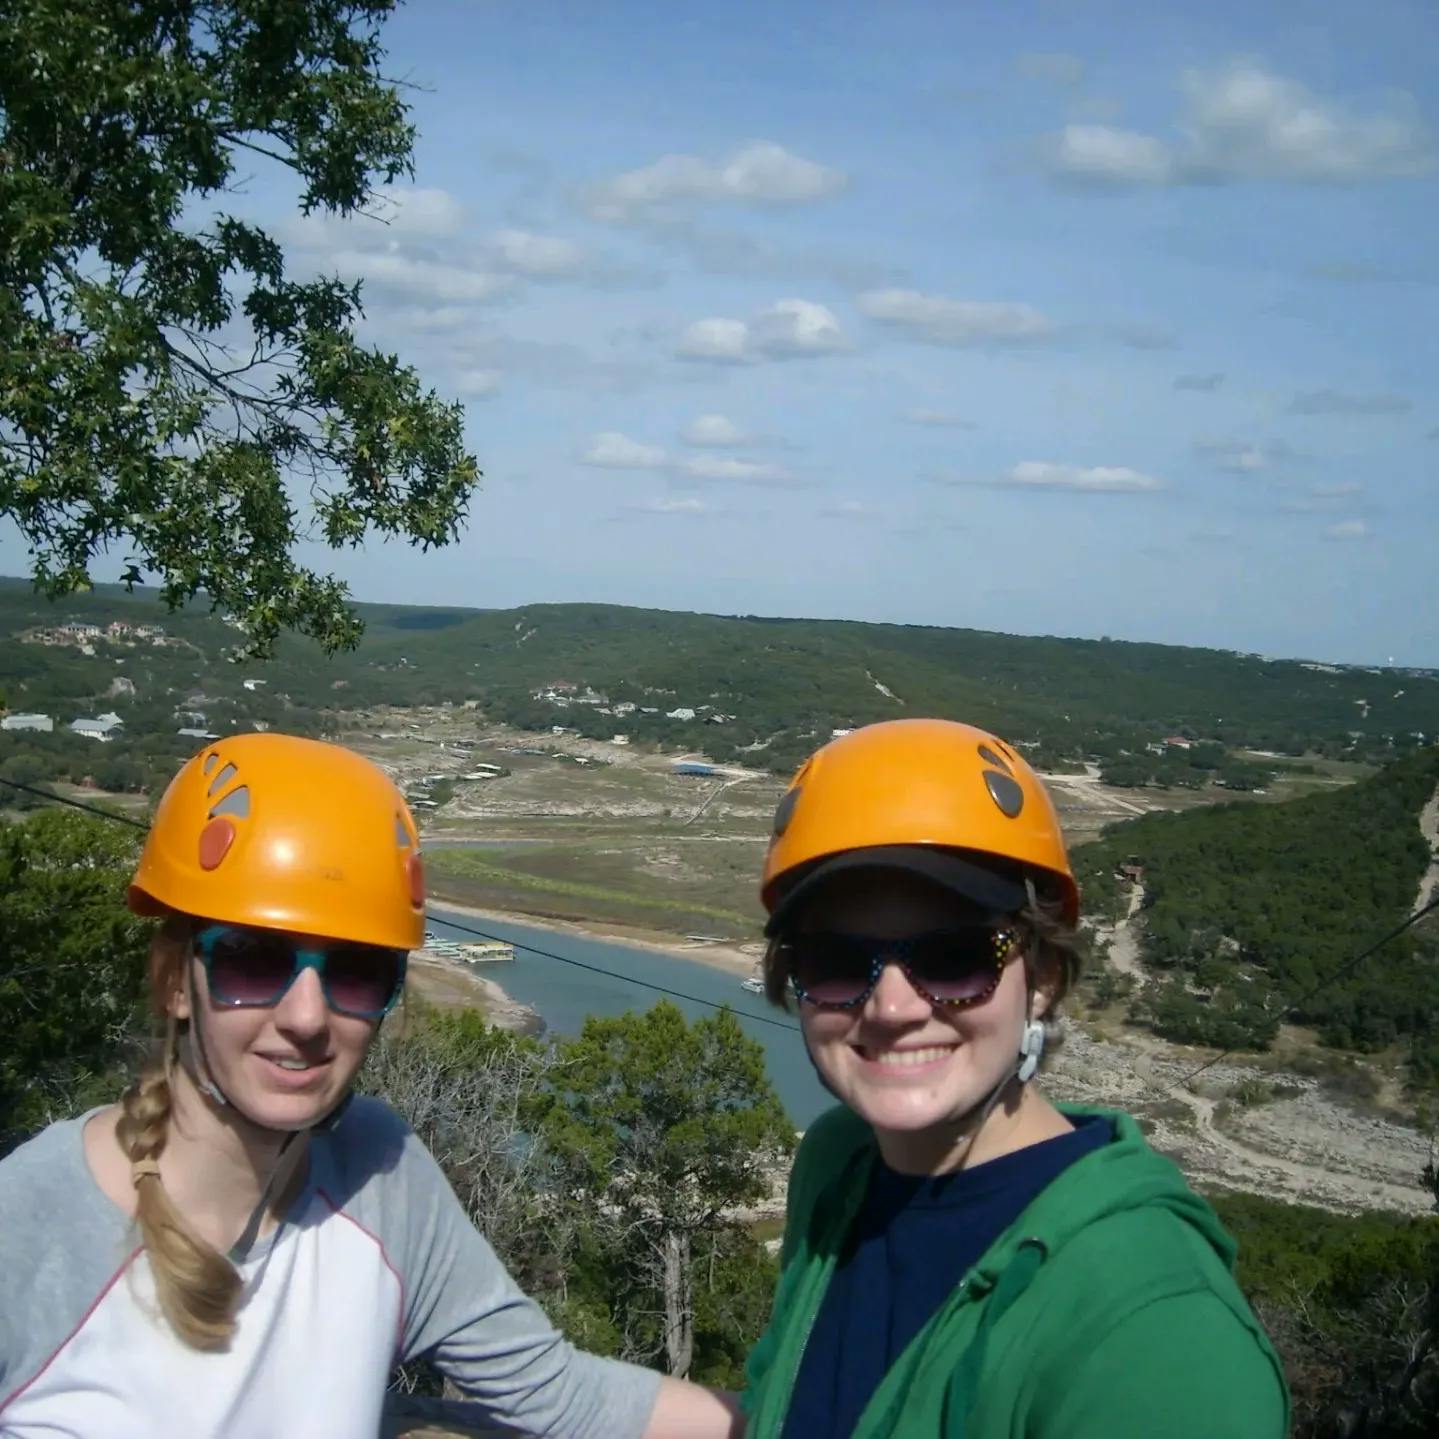 My friend and I being adventurous - ziplining near Austin.